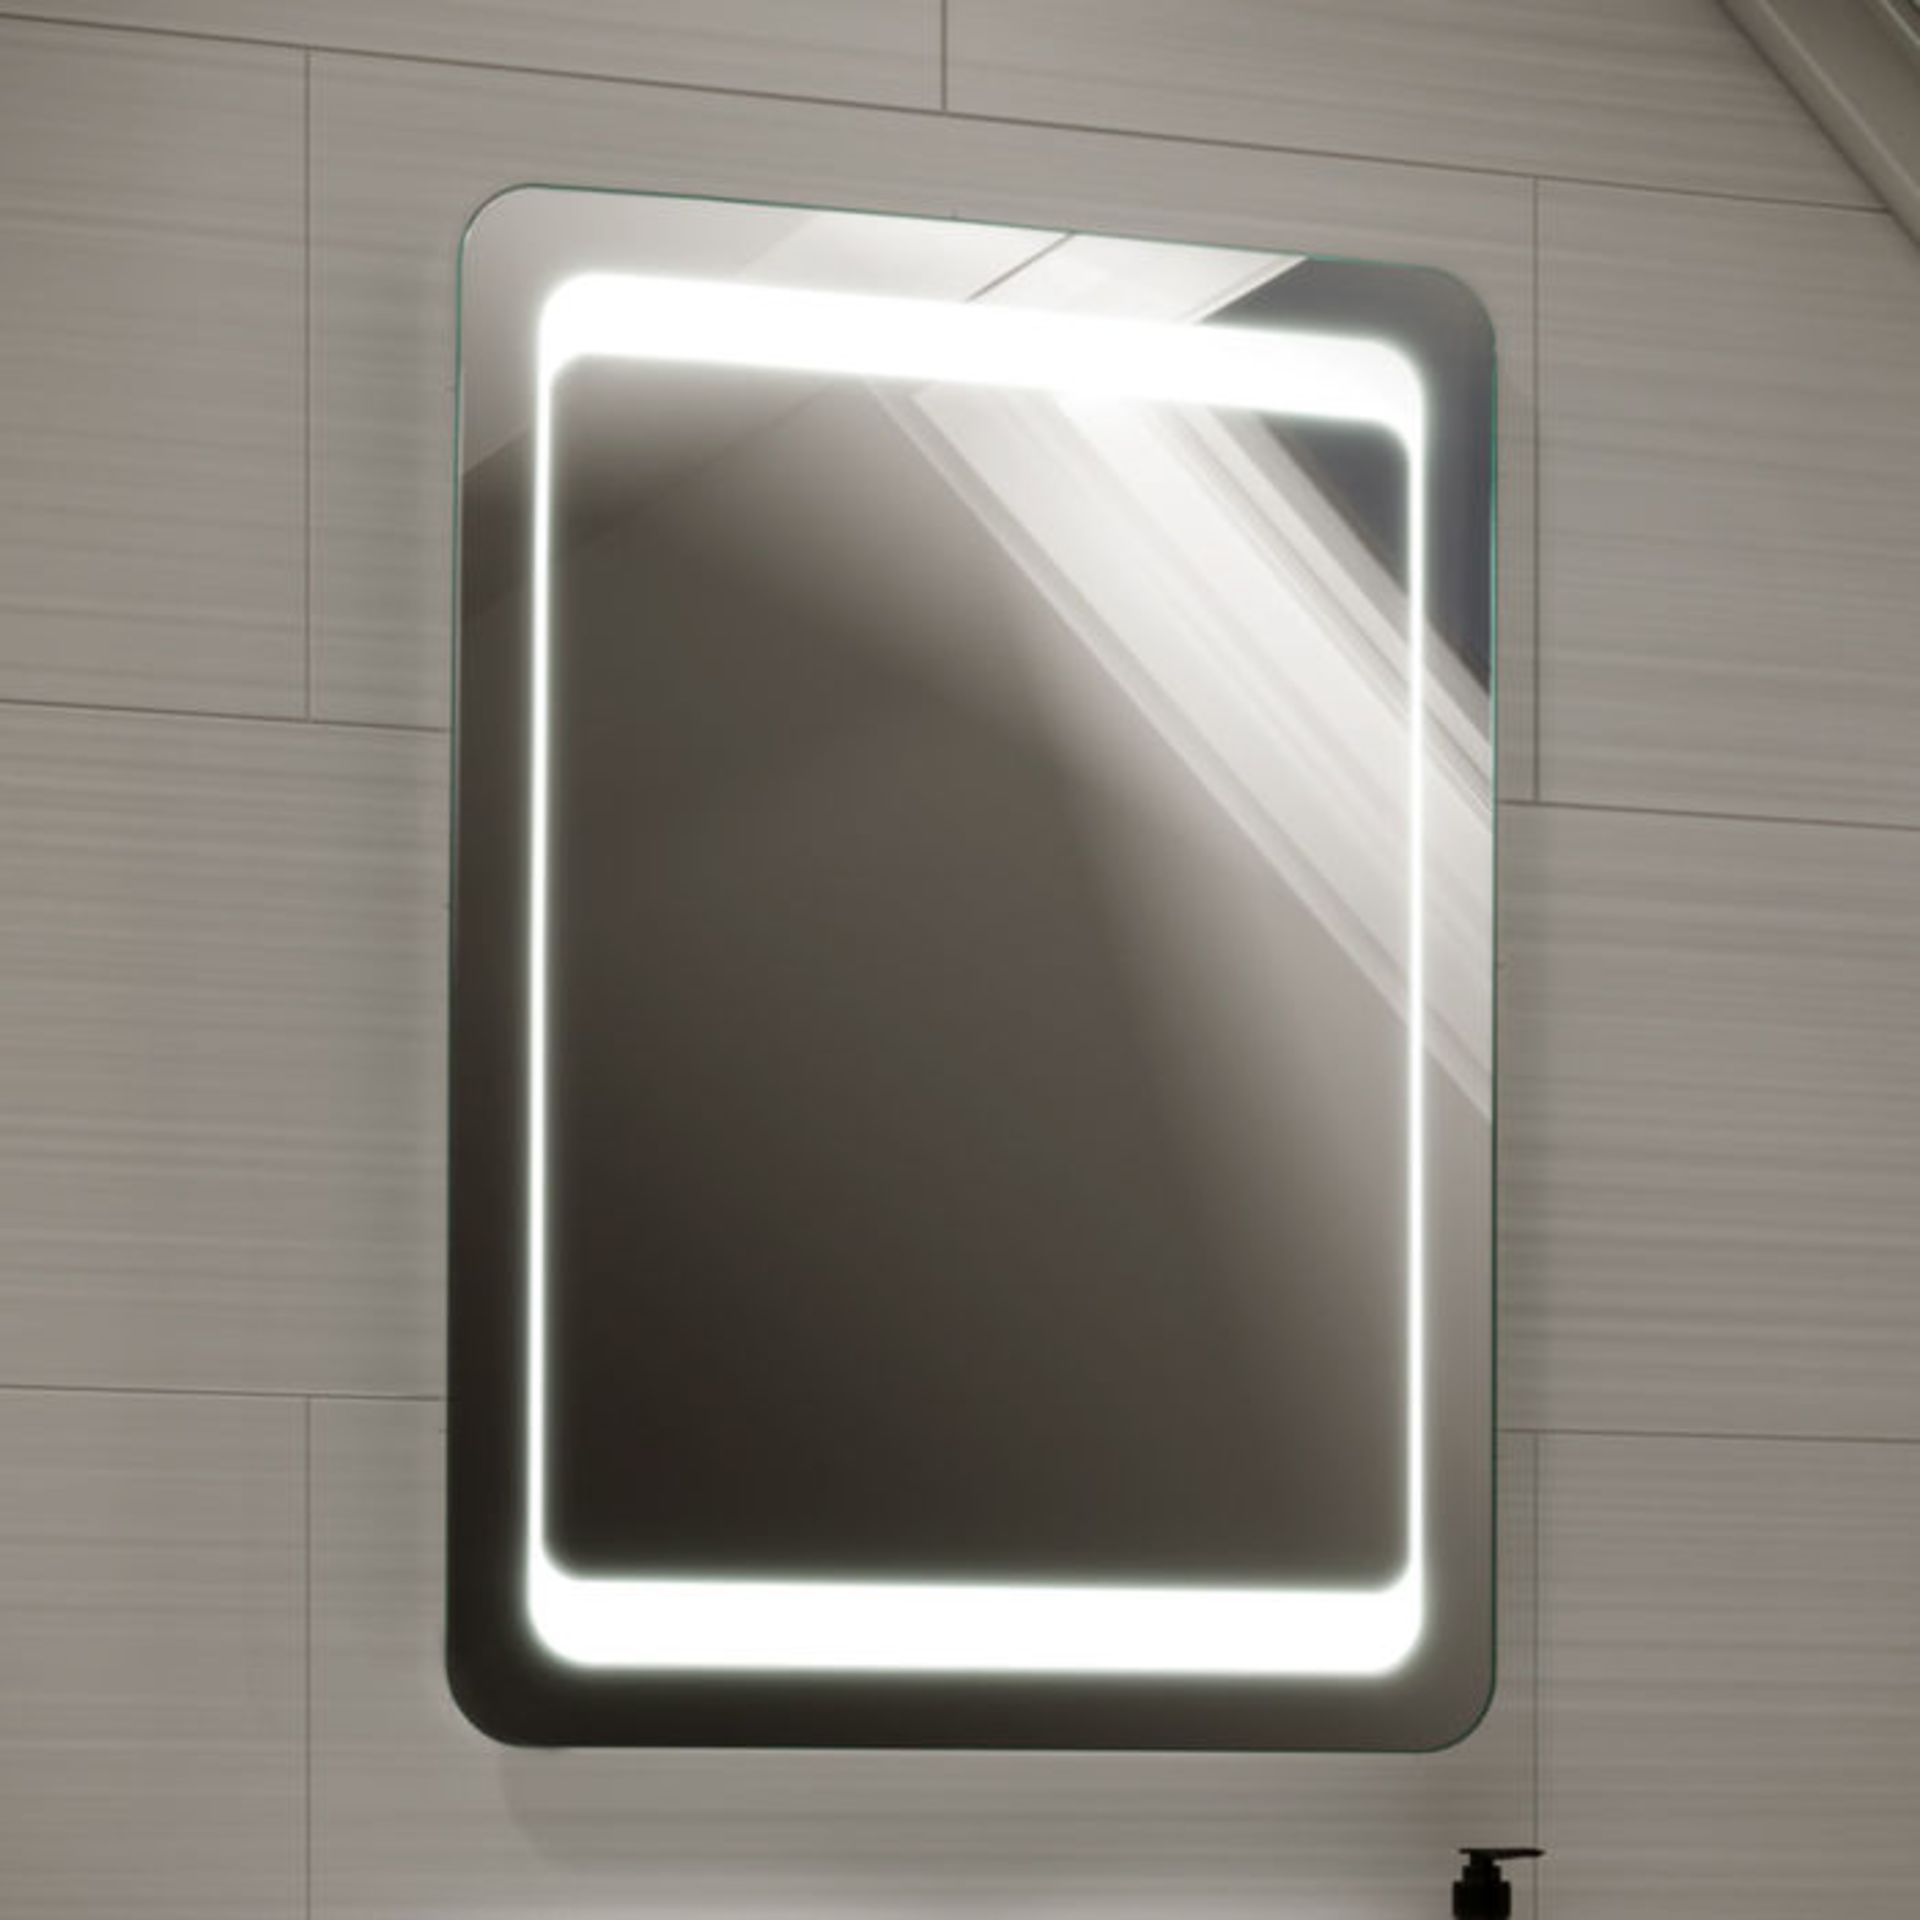 (E155) 700x500mm Quasar Illuminated LED Mirror. RRP £349.99. Energy efficient LED lighting with IP44